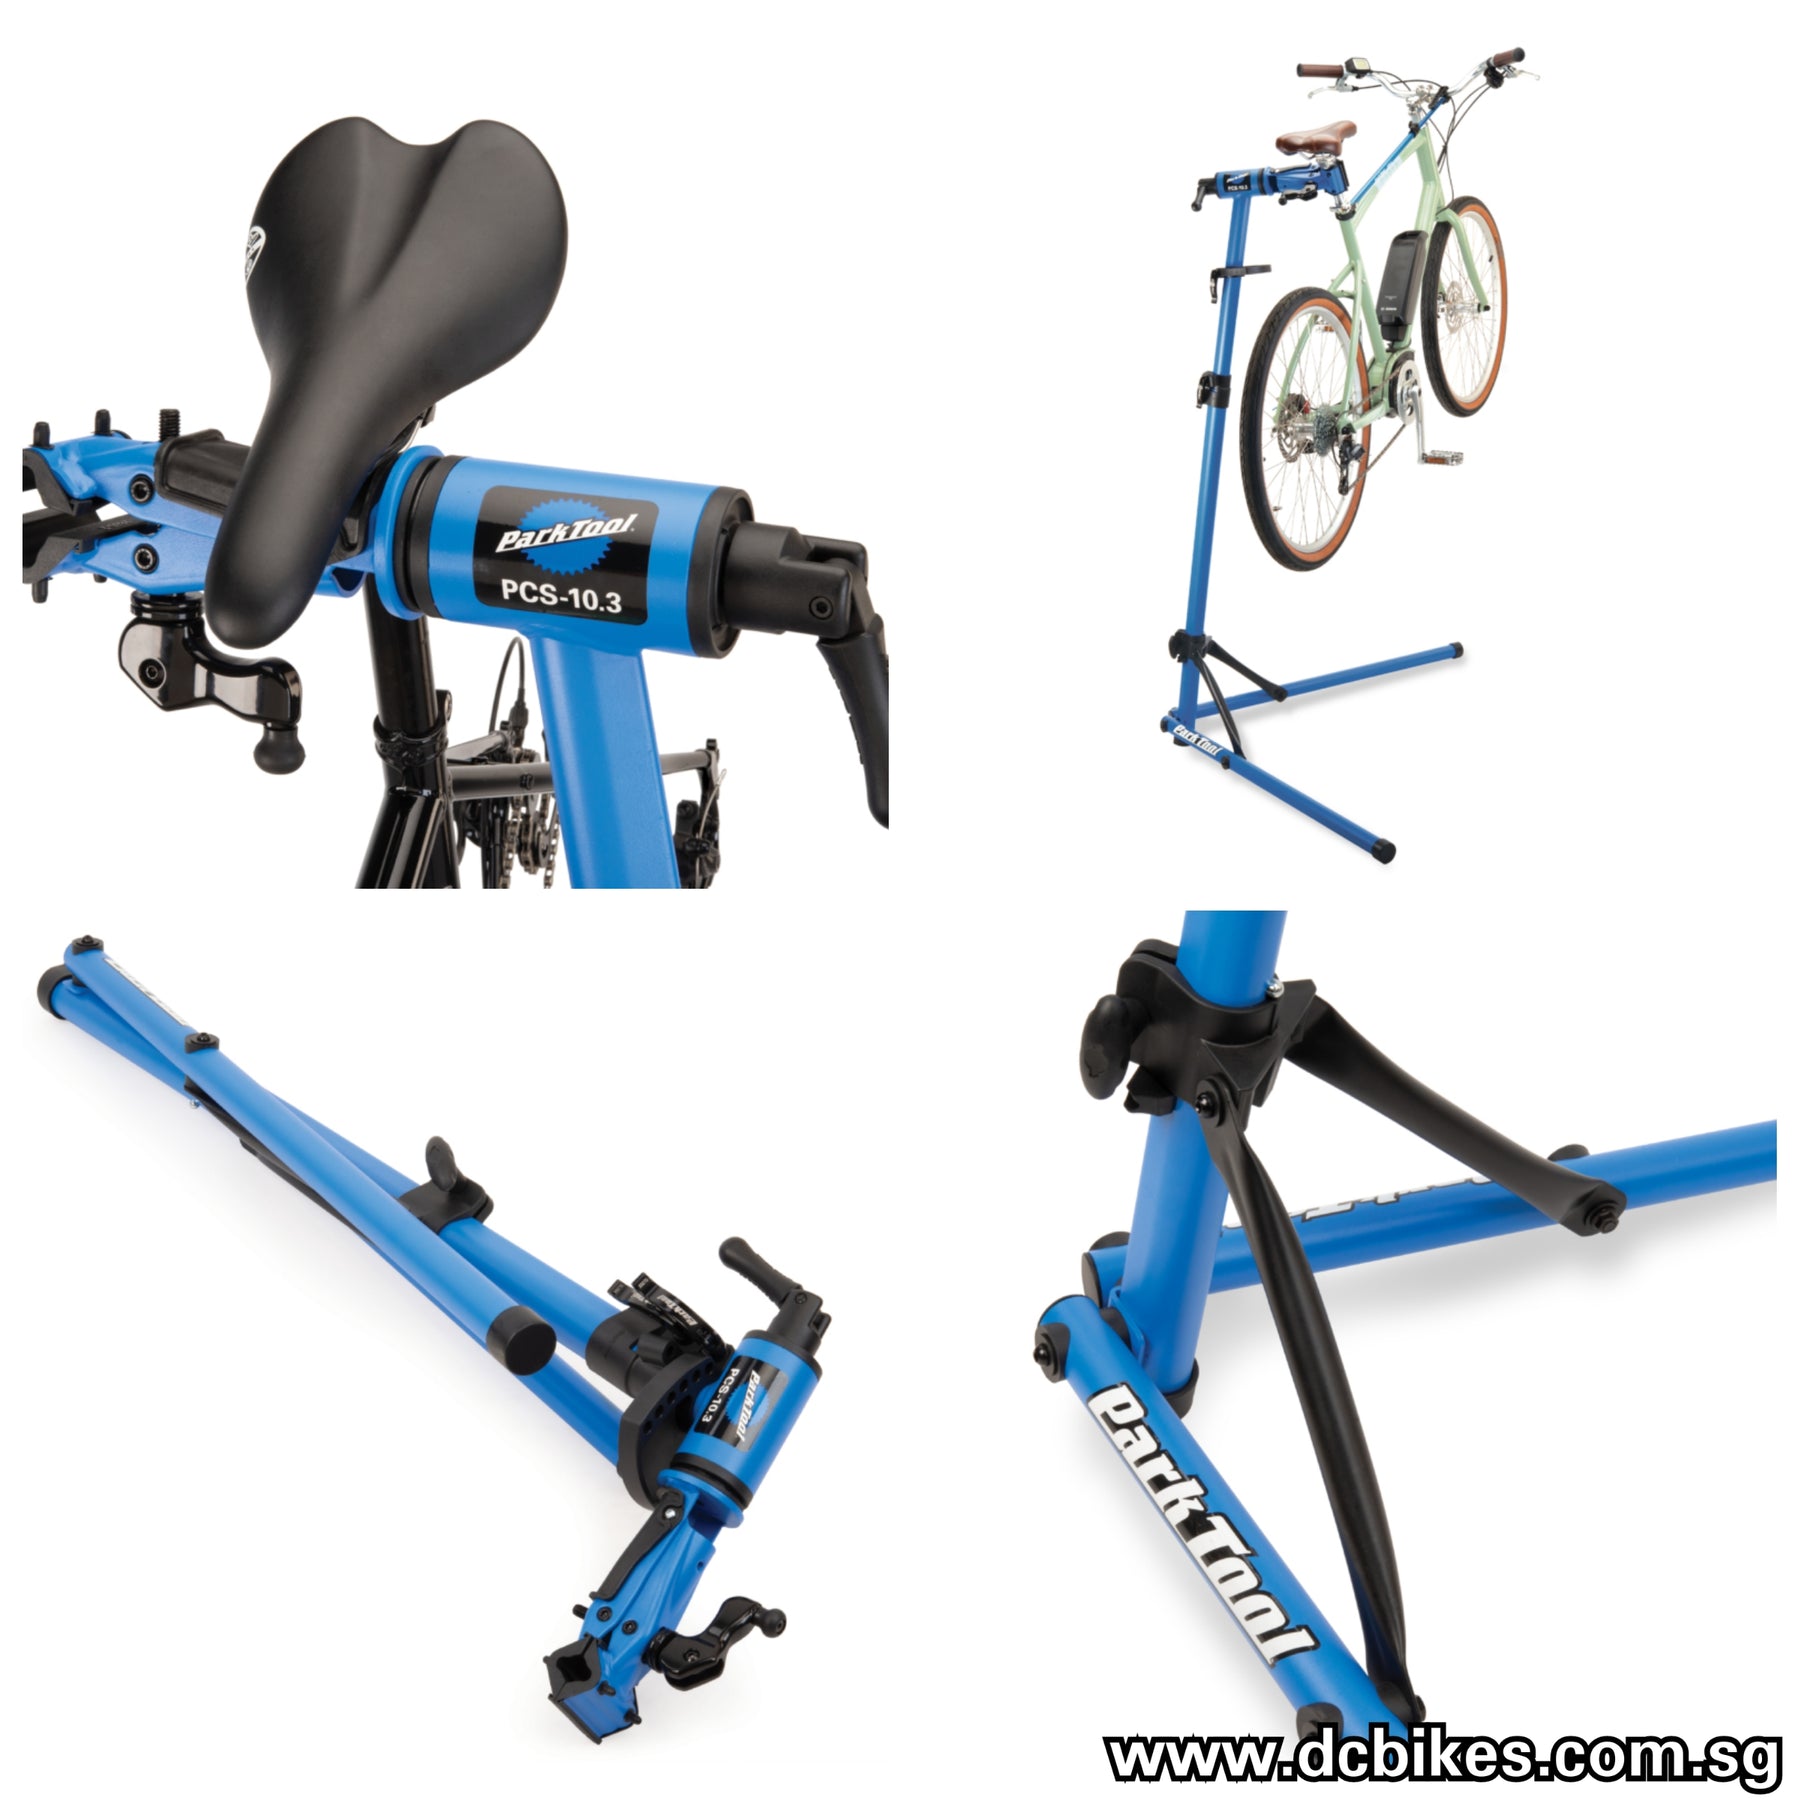 Park Tool Bike Stands & Professional Bike Maintenance Tools